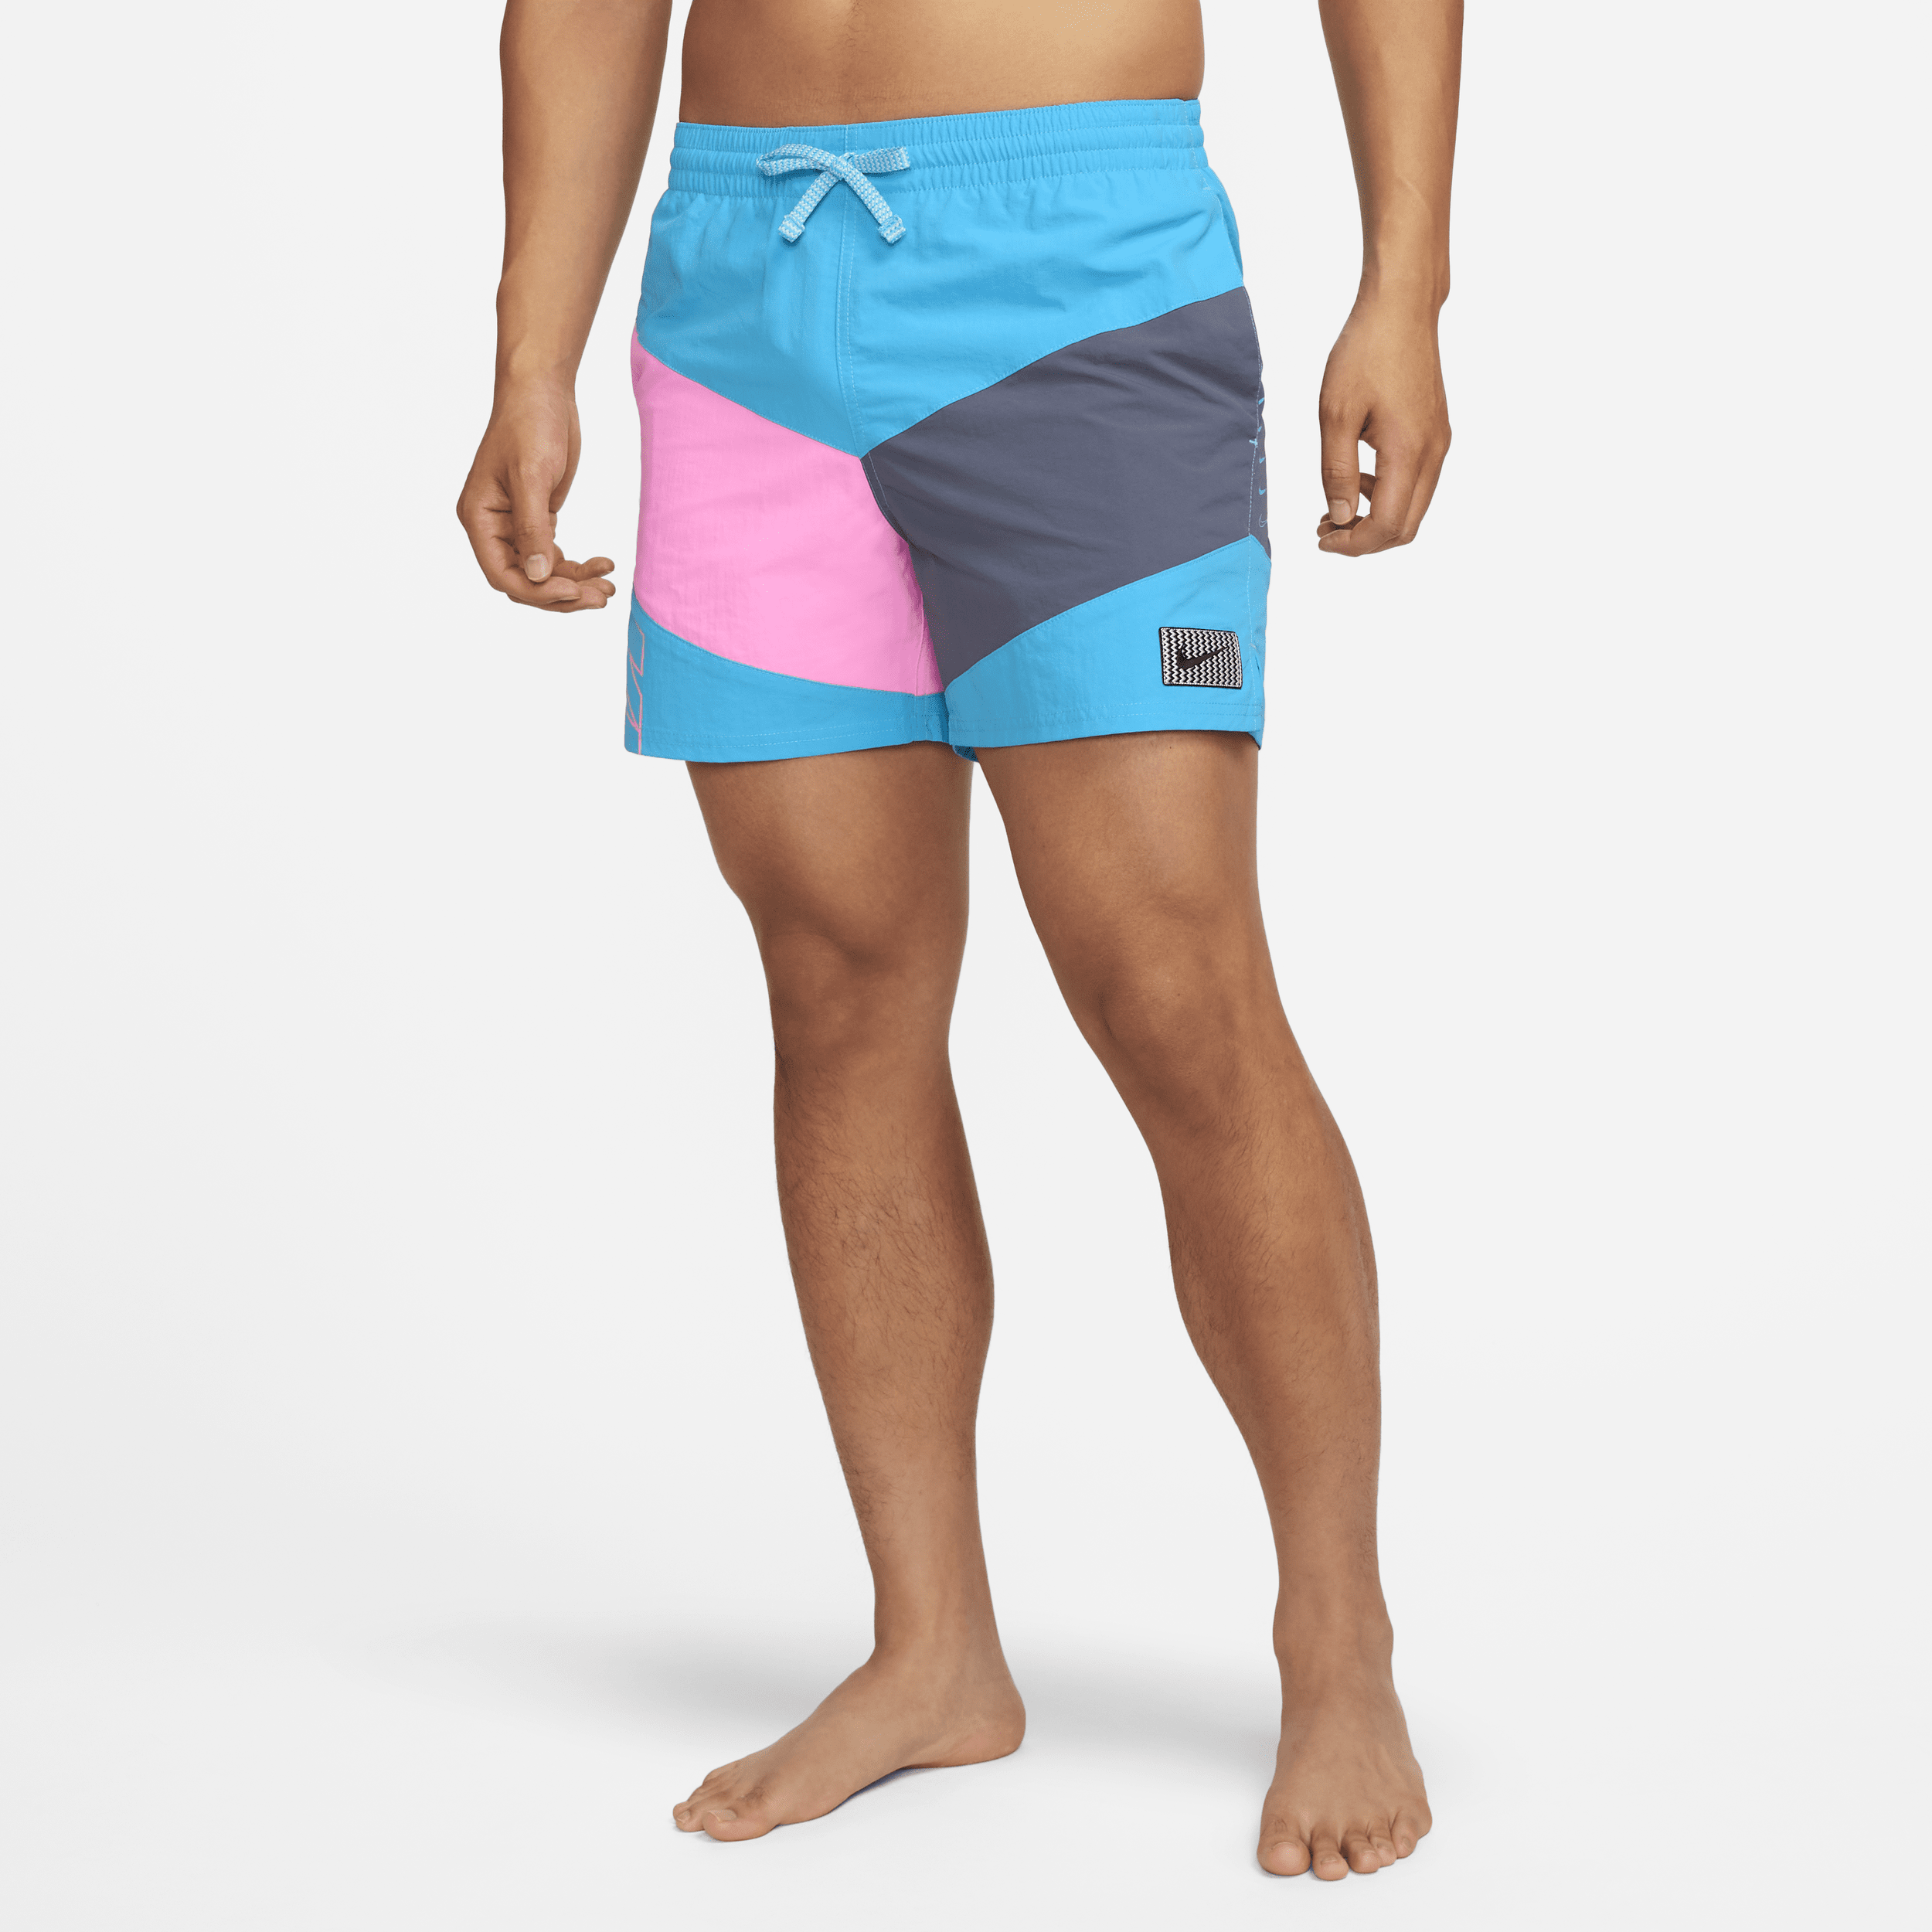 Shorts da mare Volley Nike 13 cm – Uomo - Blu